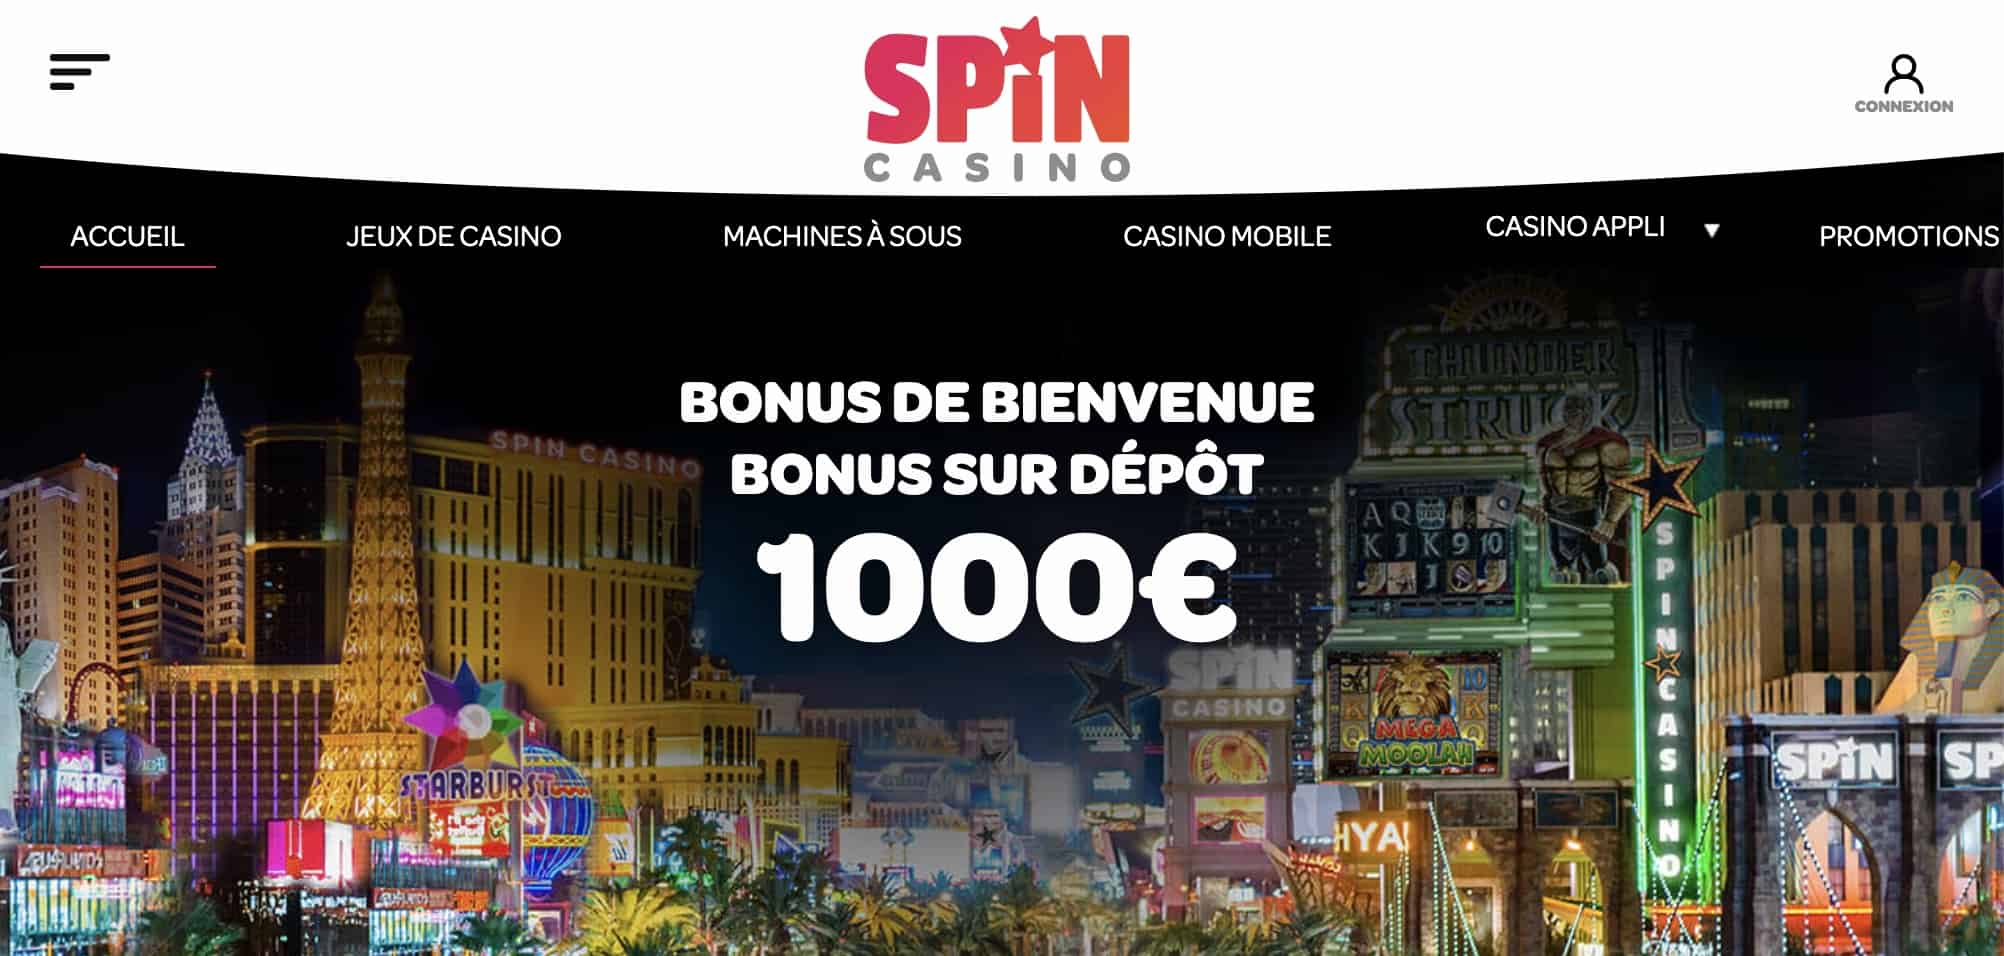 Spin online casino